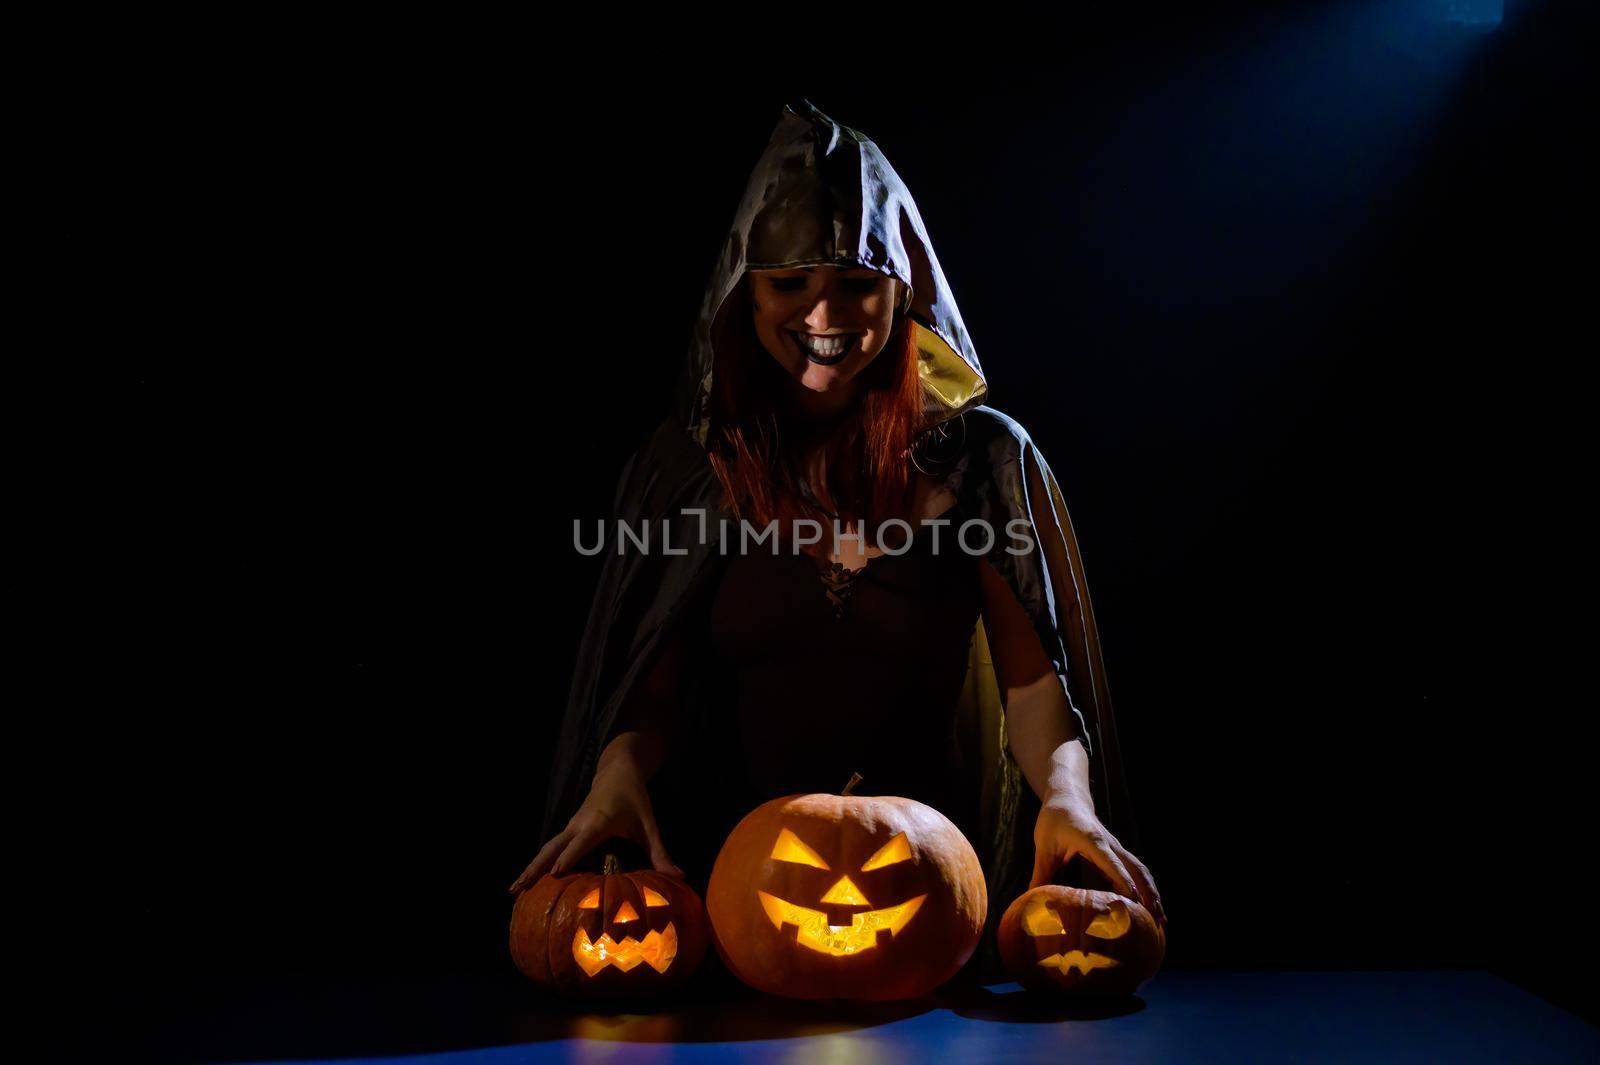 A creepy sorceress in a cloak casts a spell on pumpkins for Halloween.